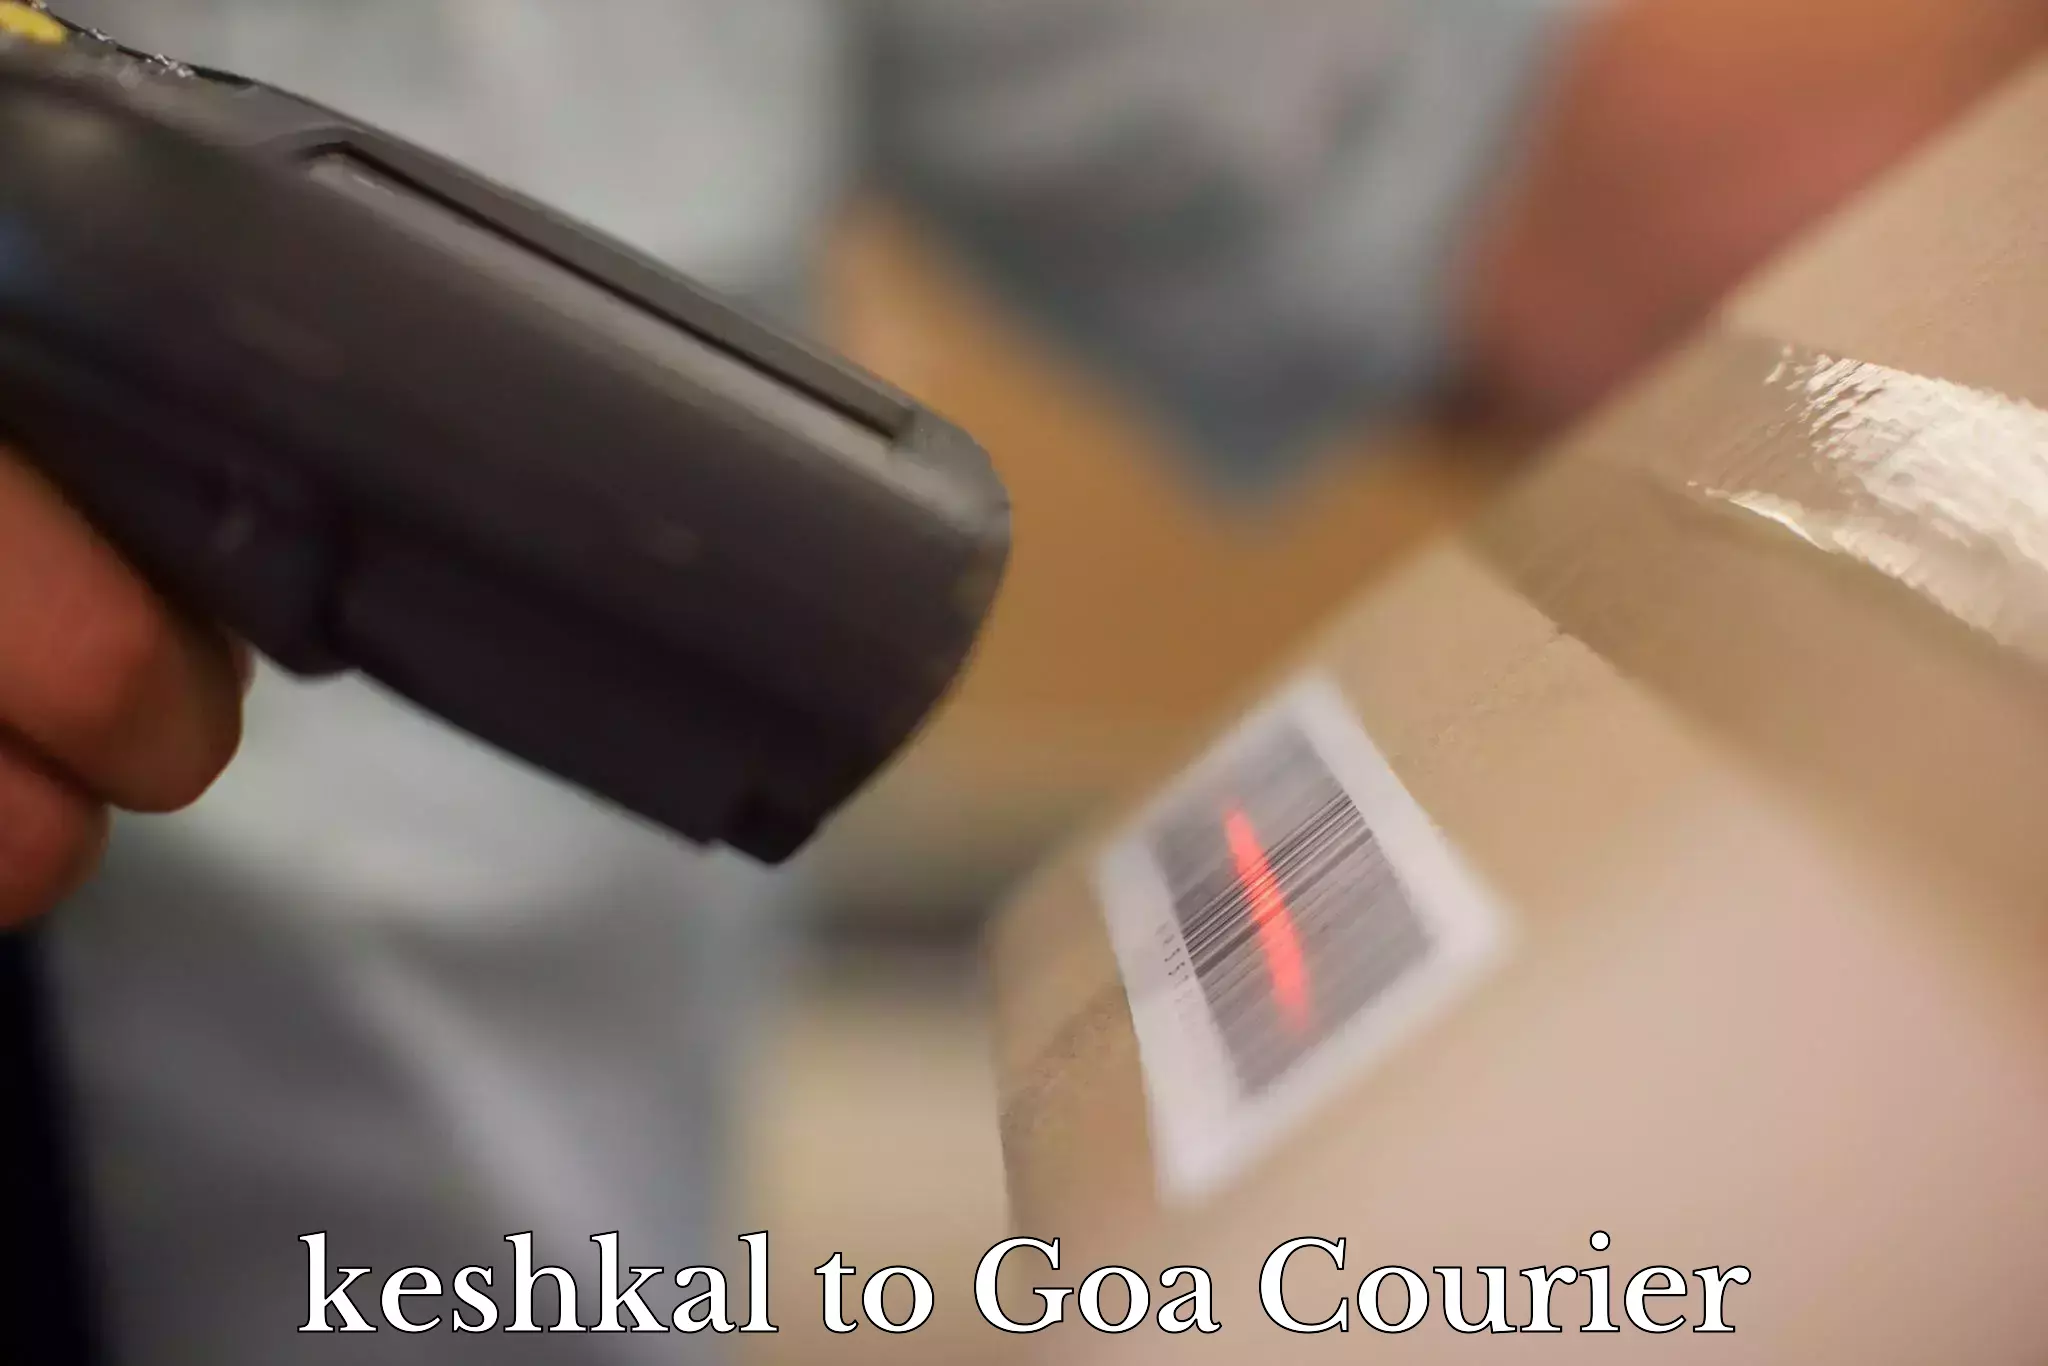 Personalized moving plans keshkal to Goa